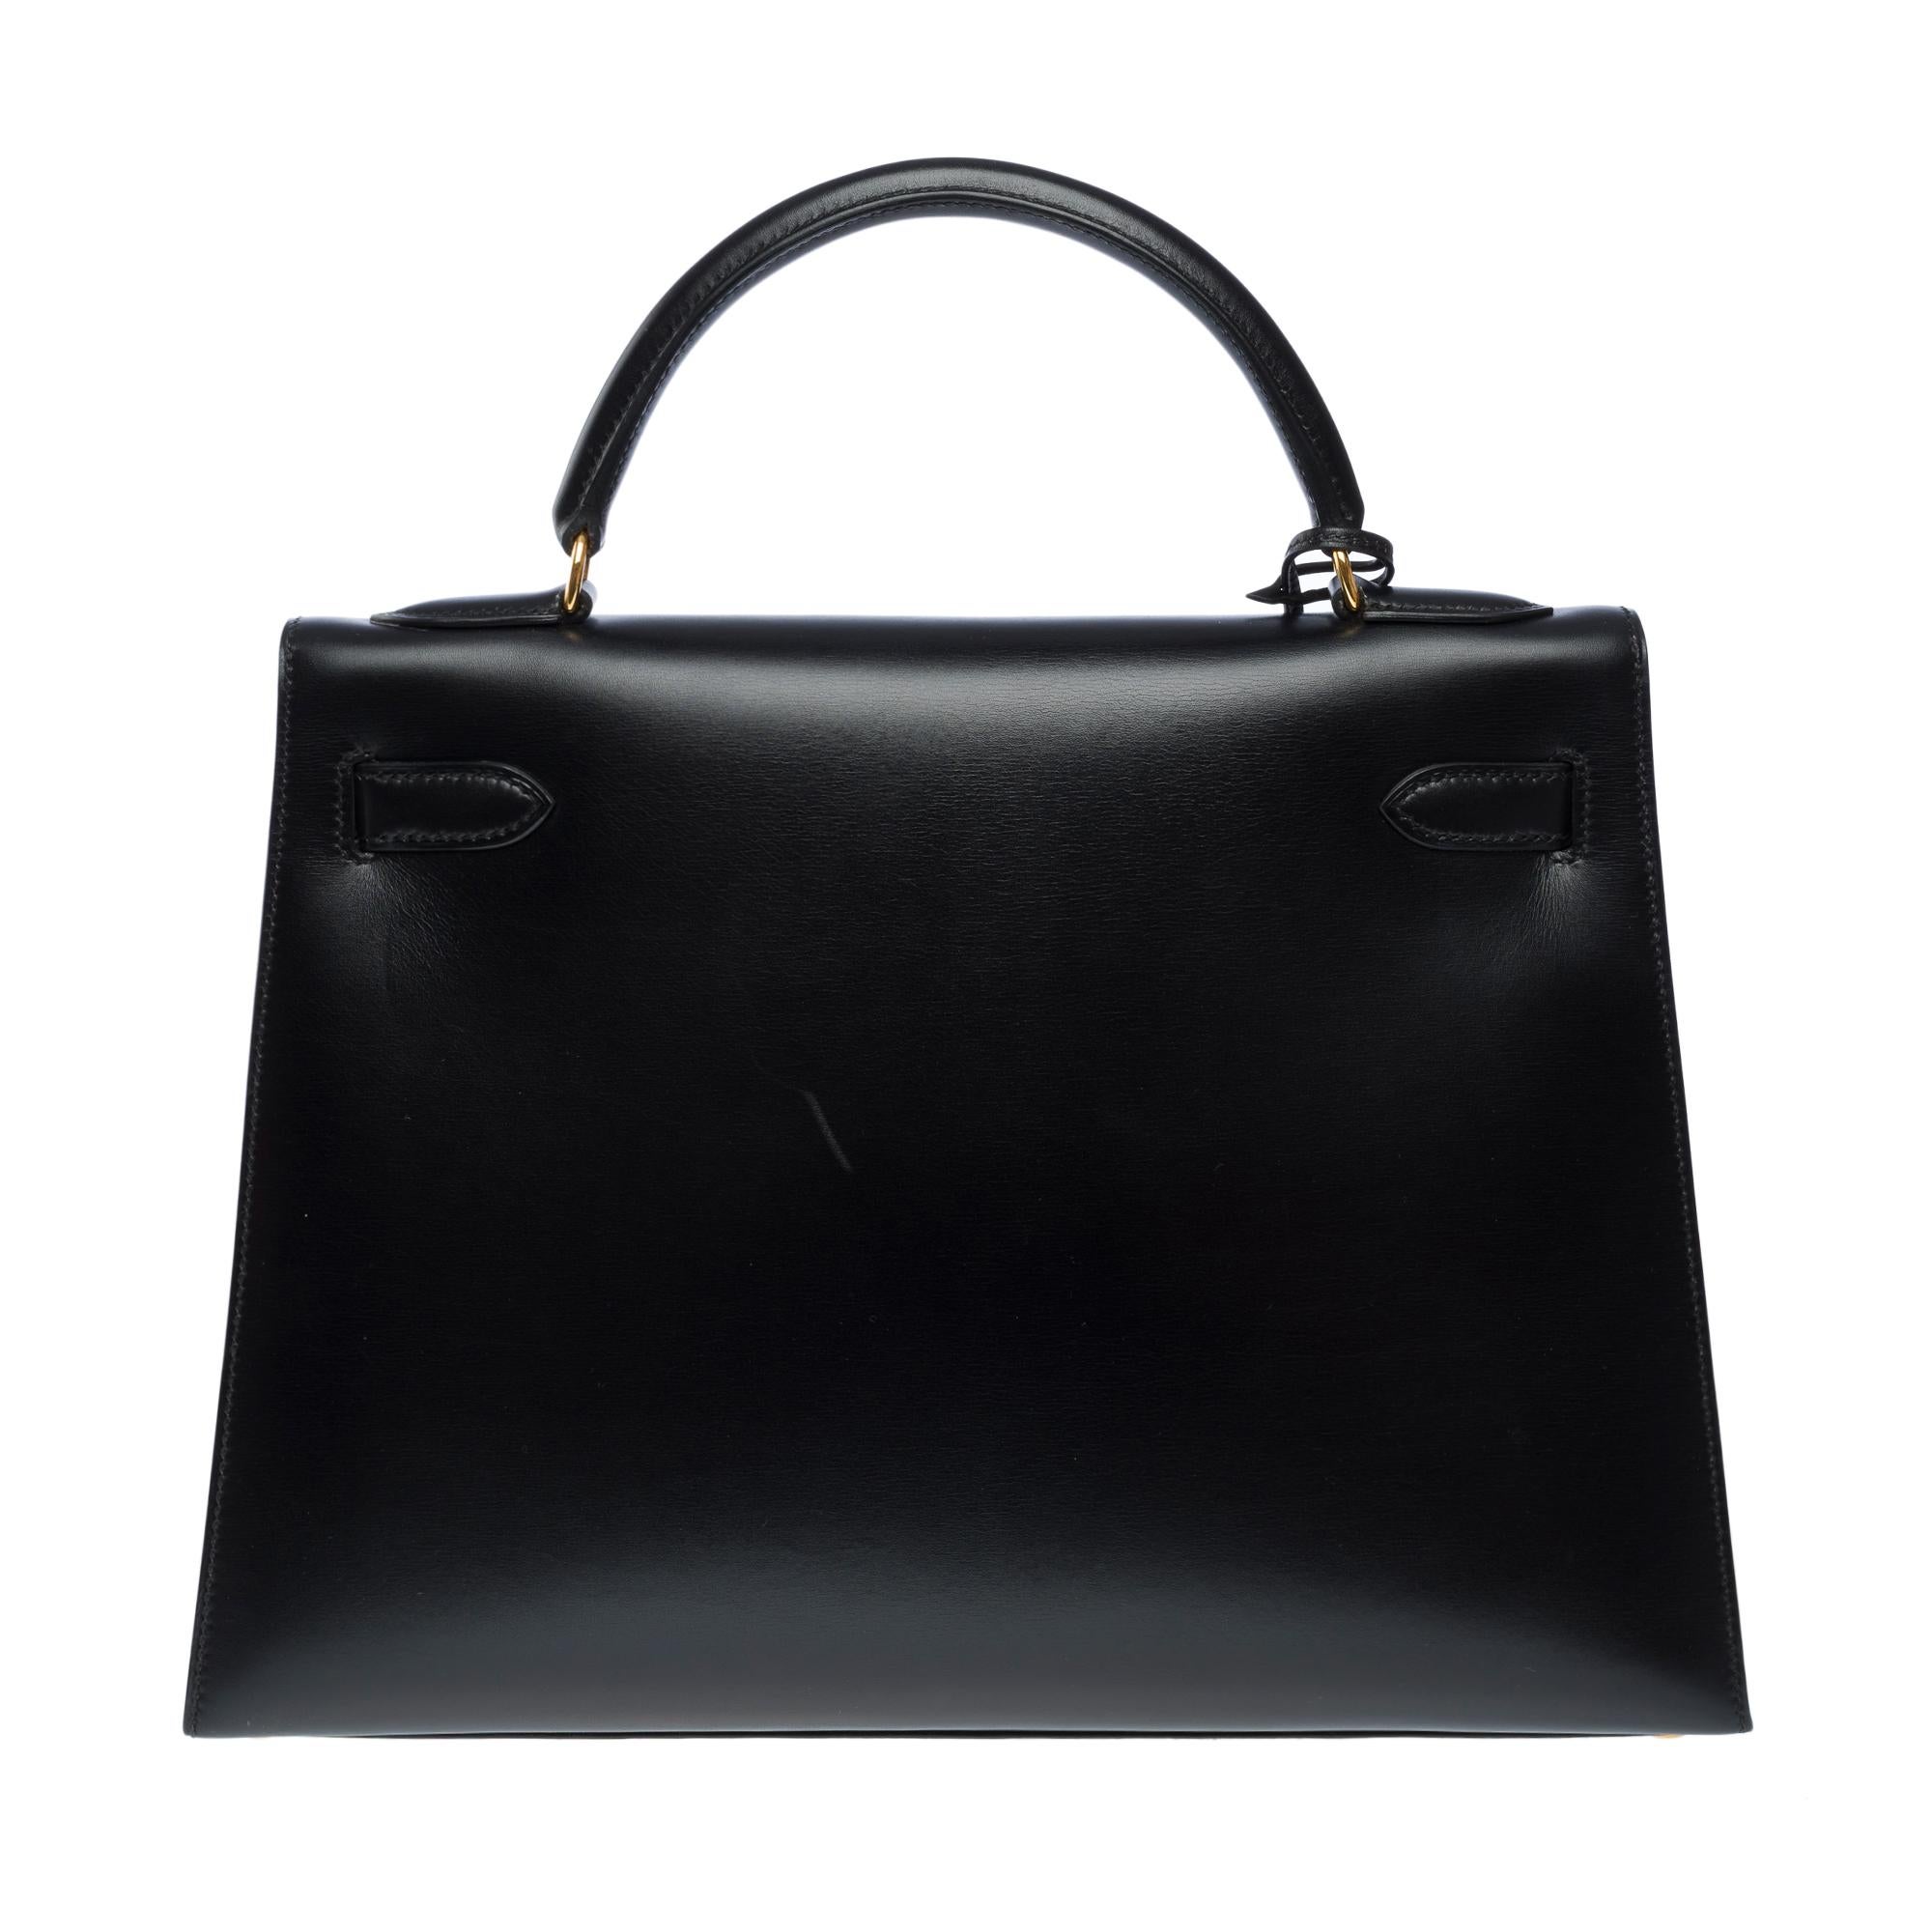 Women's Stunning Hermès Kelly 32 sellier handbag strap in Black Box Calf leather, GHW For Sale